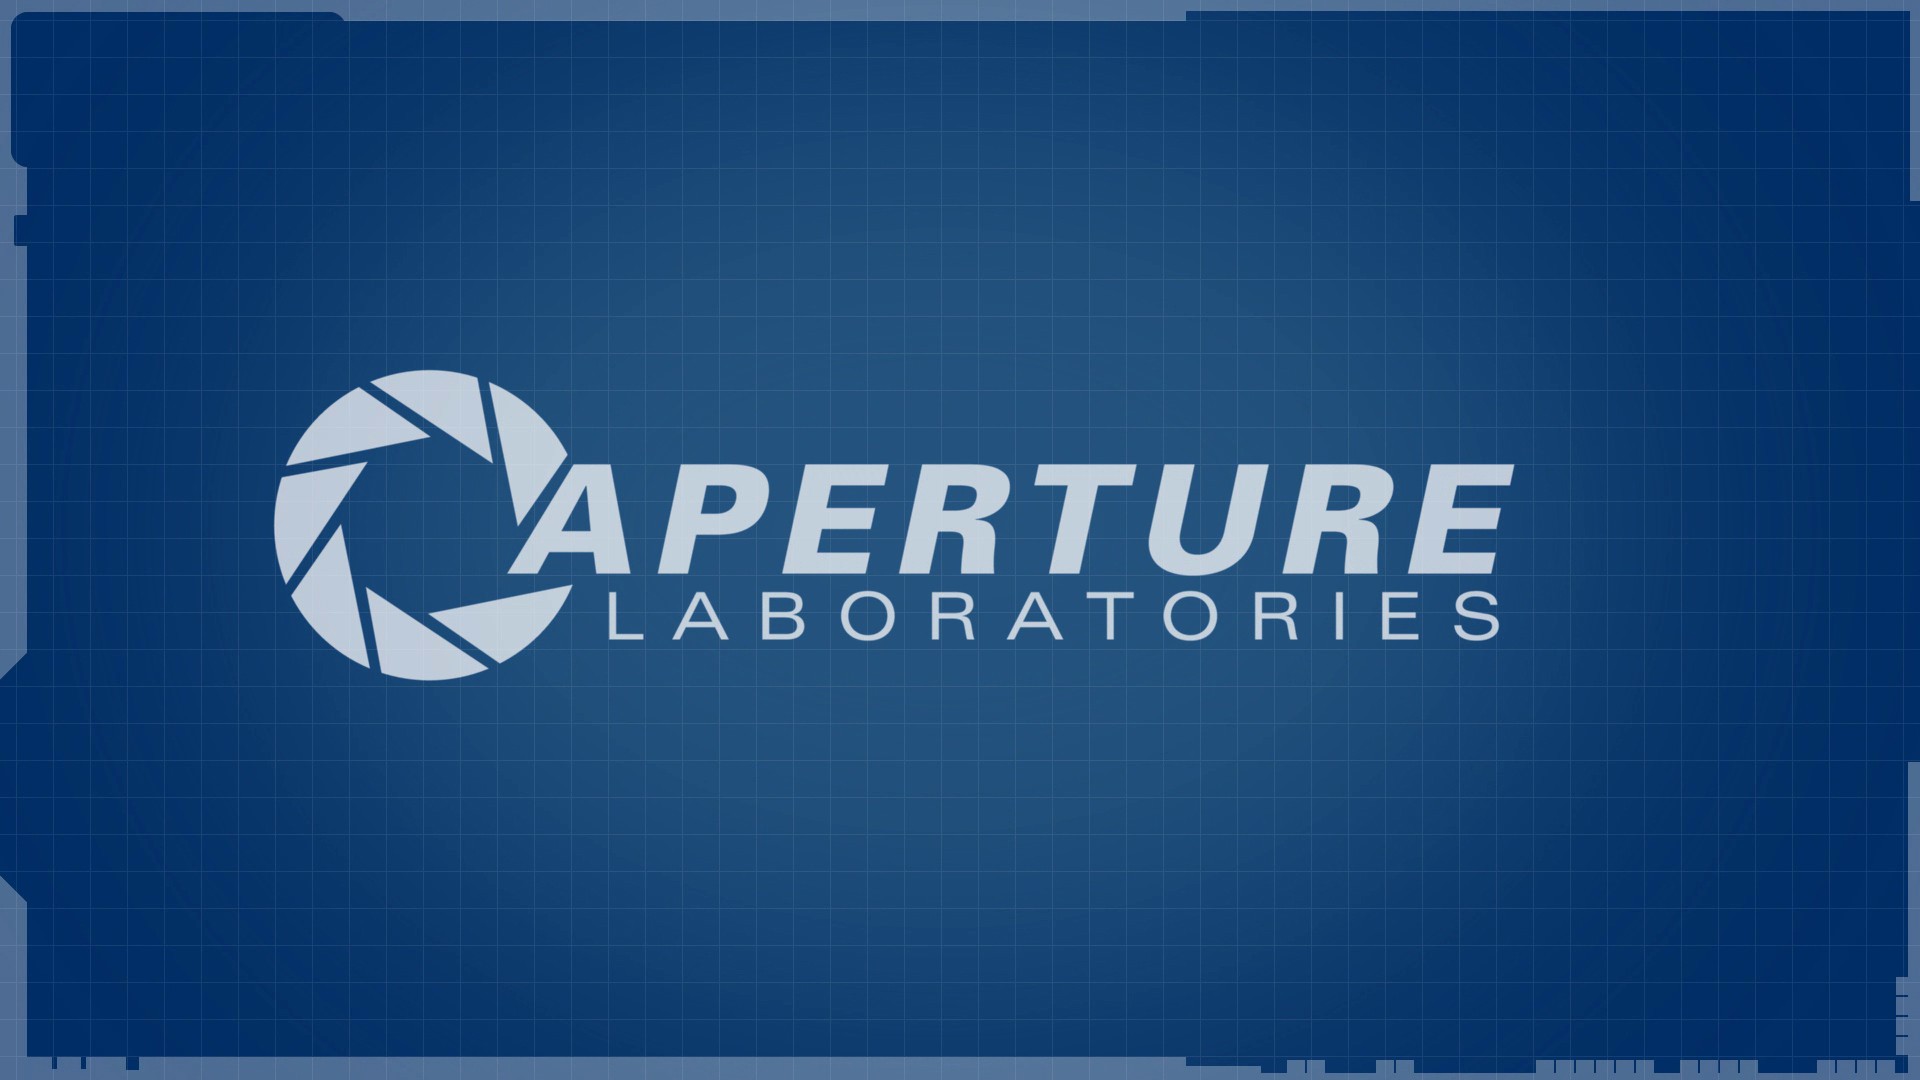 Portal 2, Aperture Laboratories Wallpaper